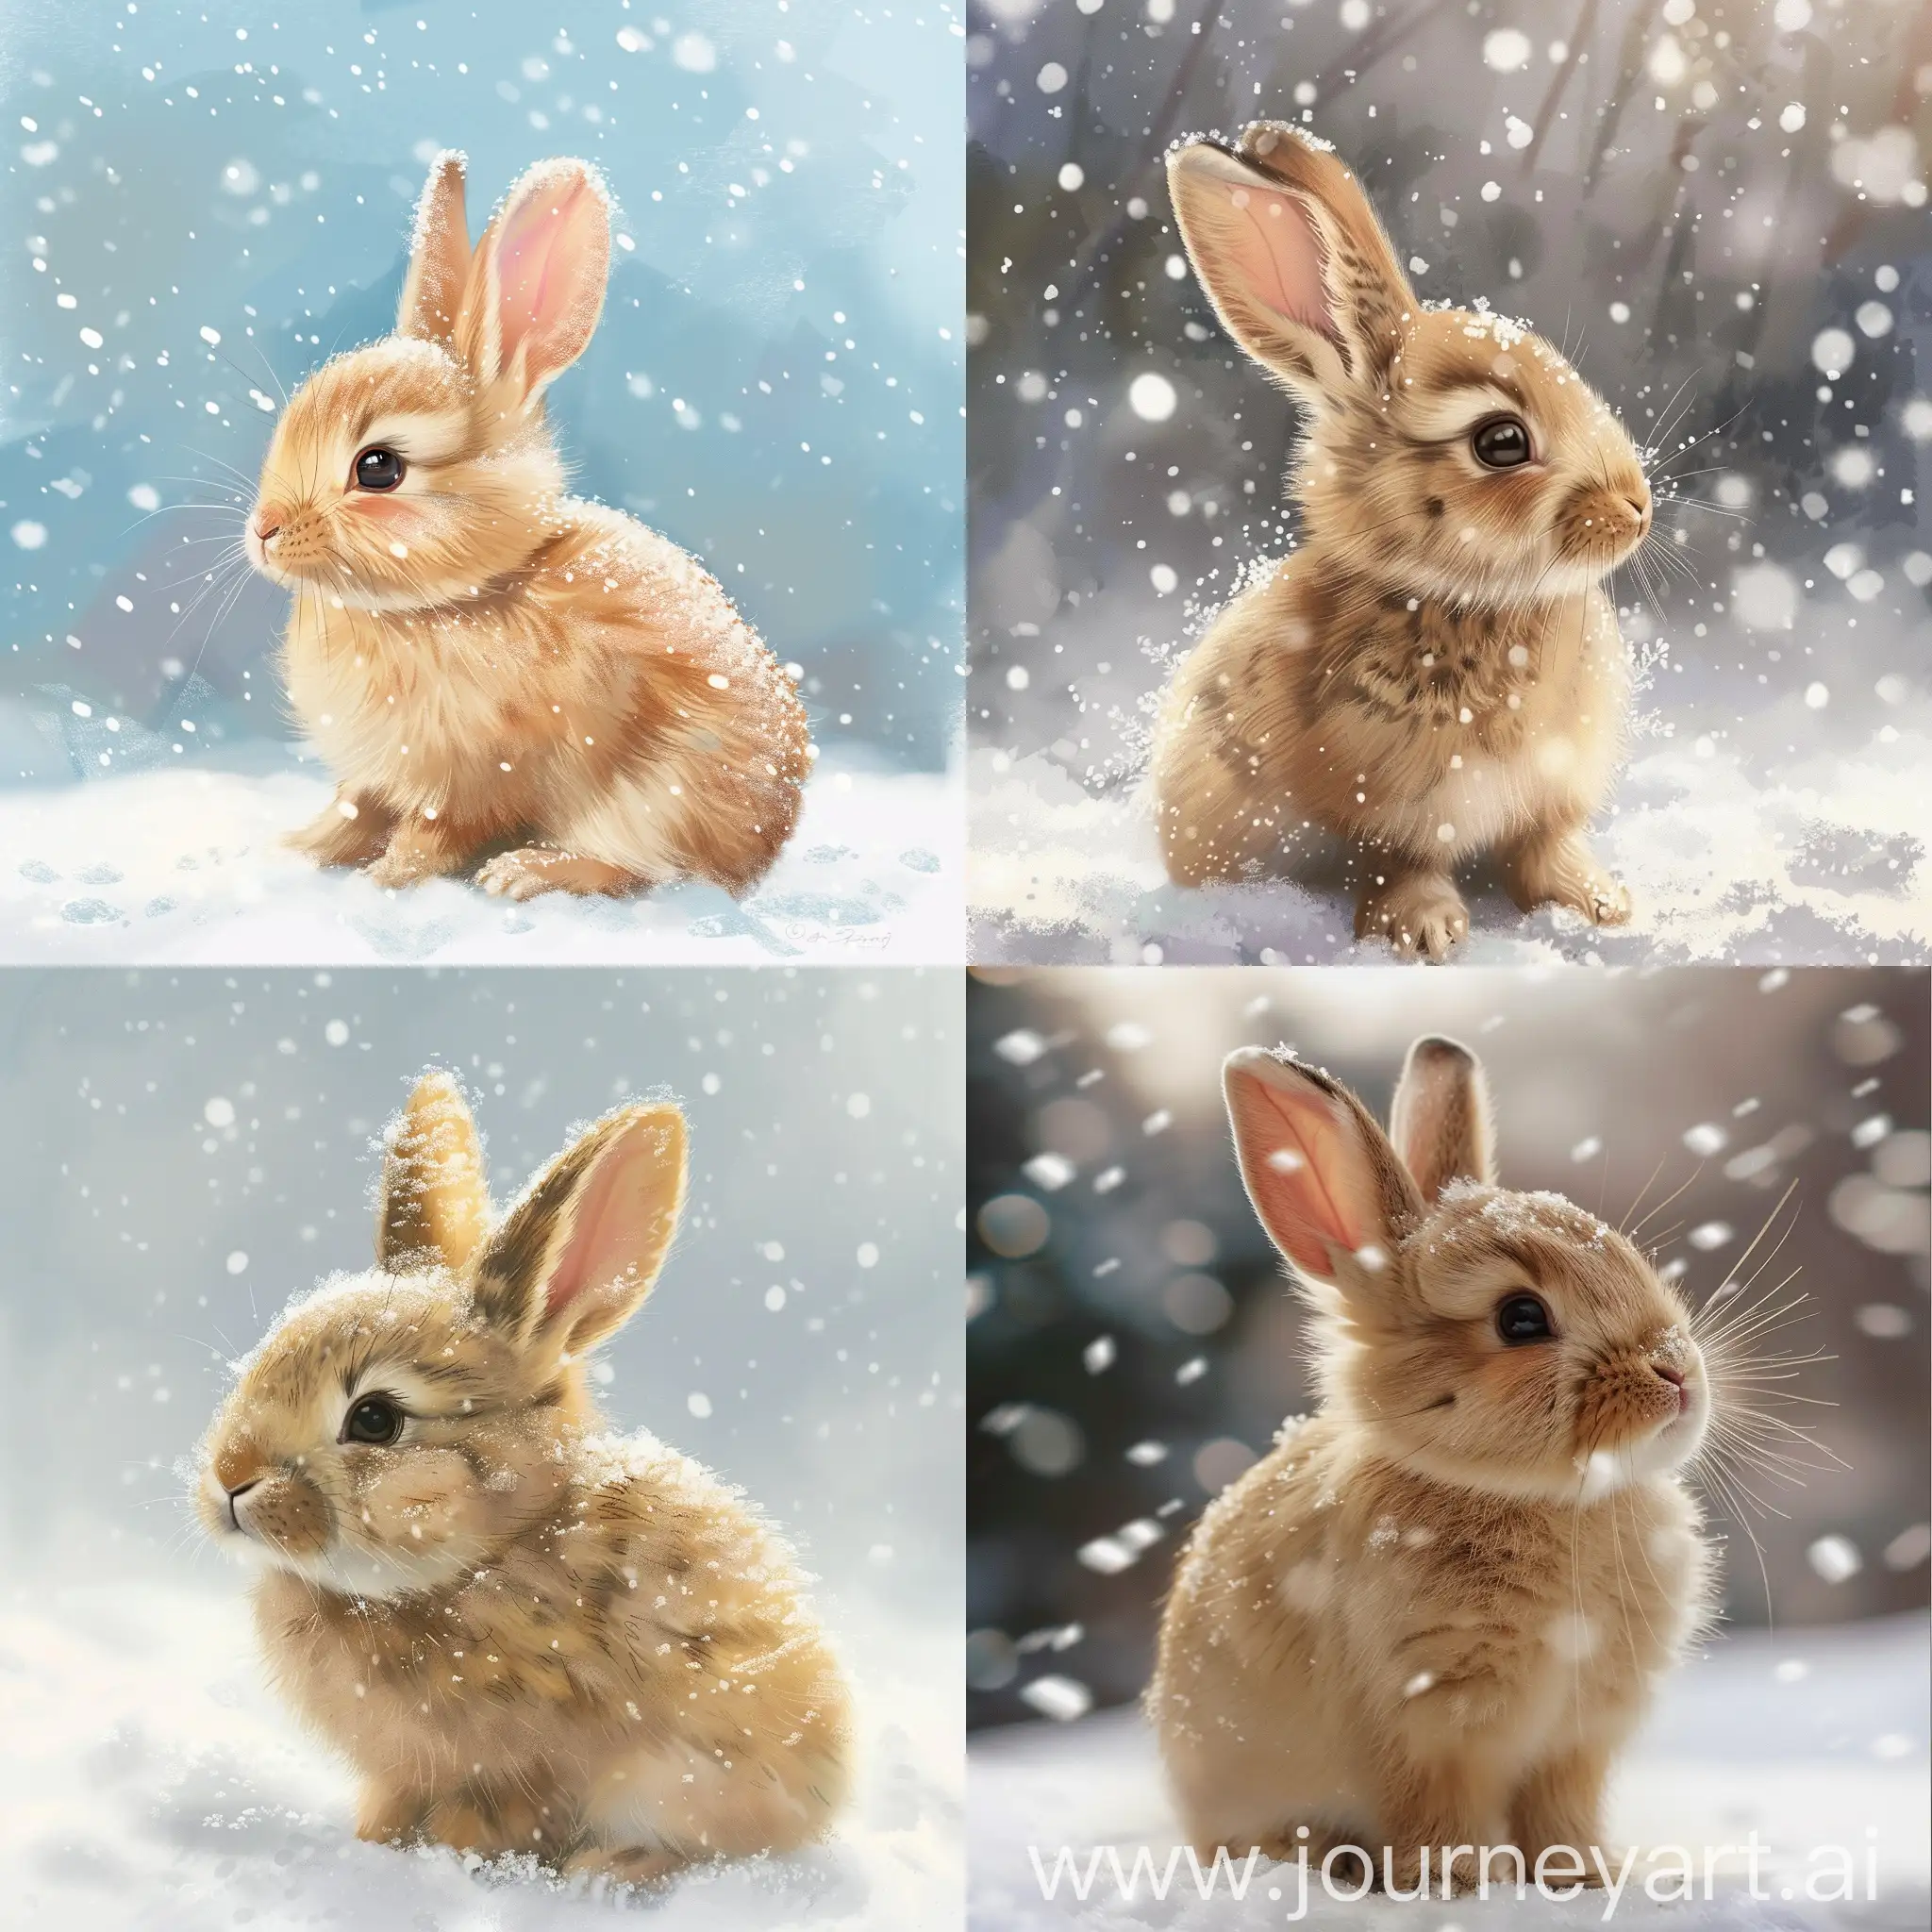 Adorable-Snowy-Bunny-in-a-Winter-Wonderland